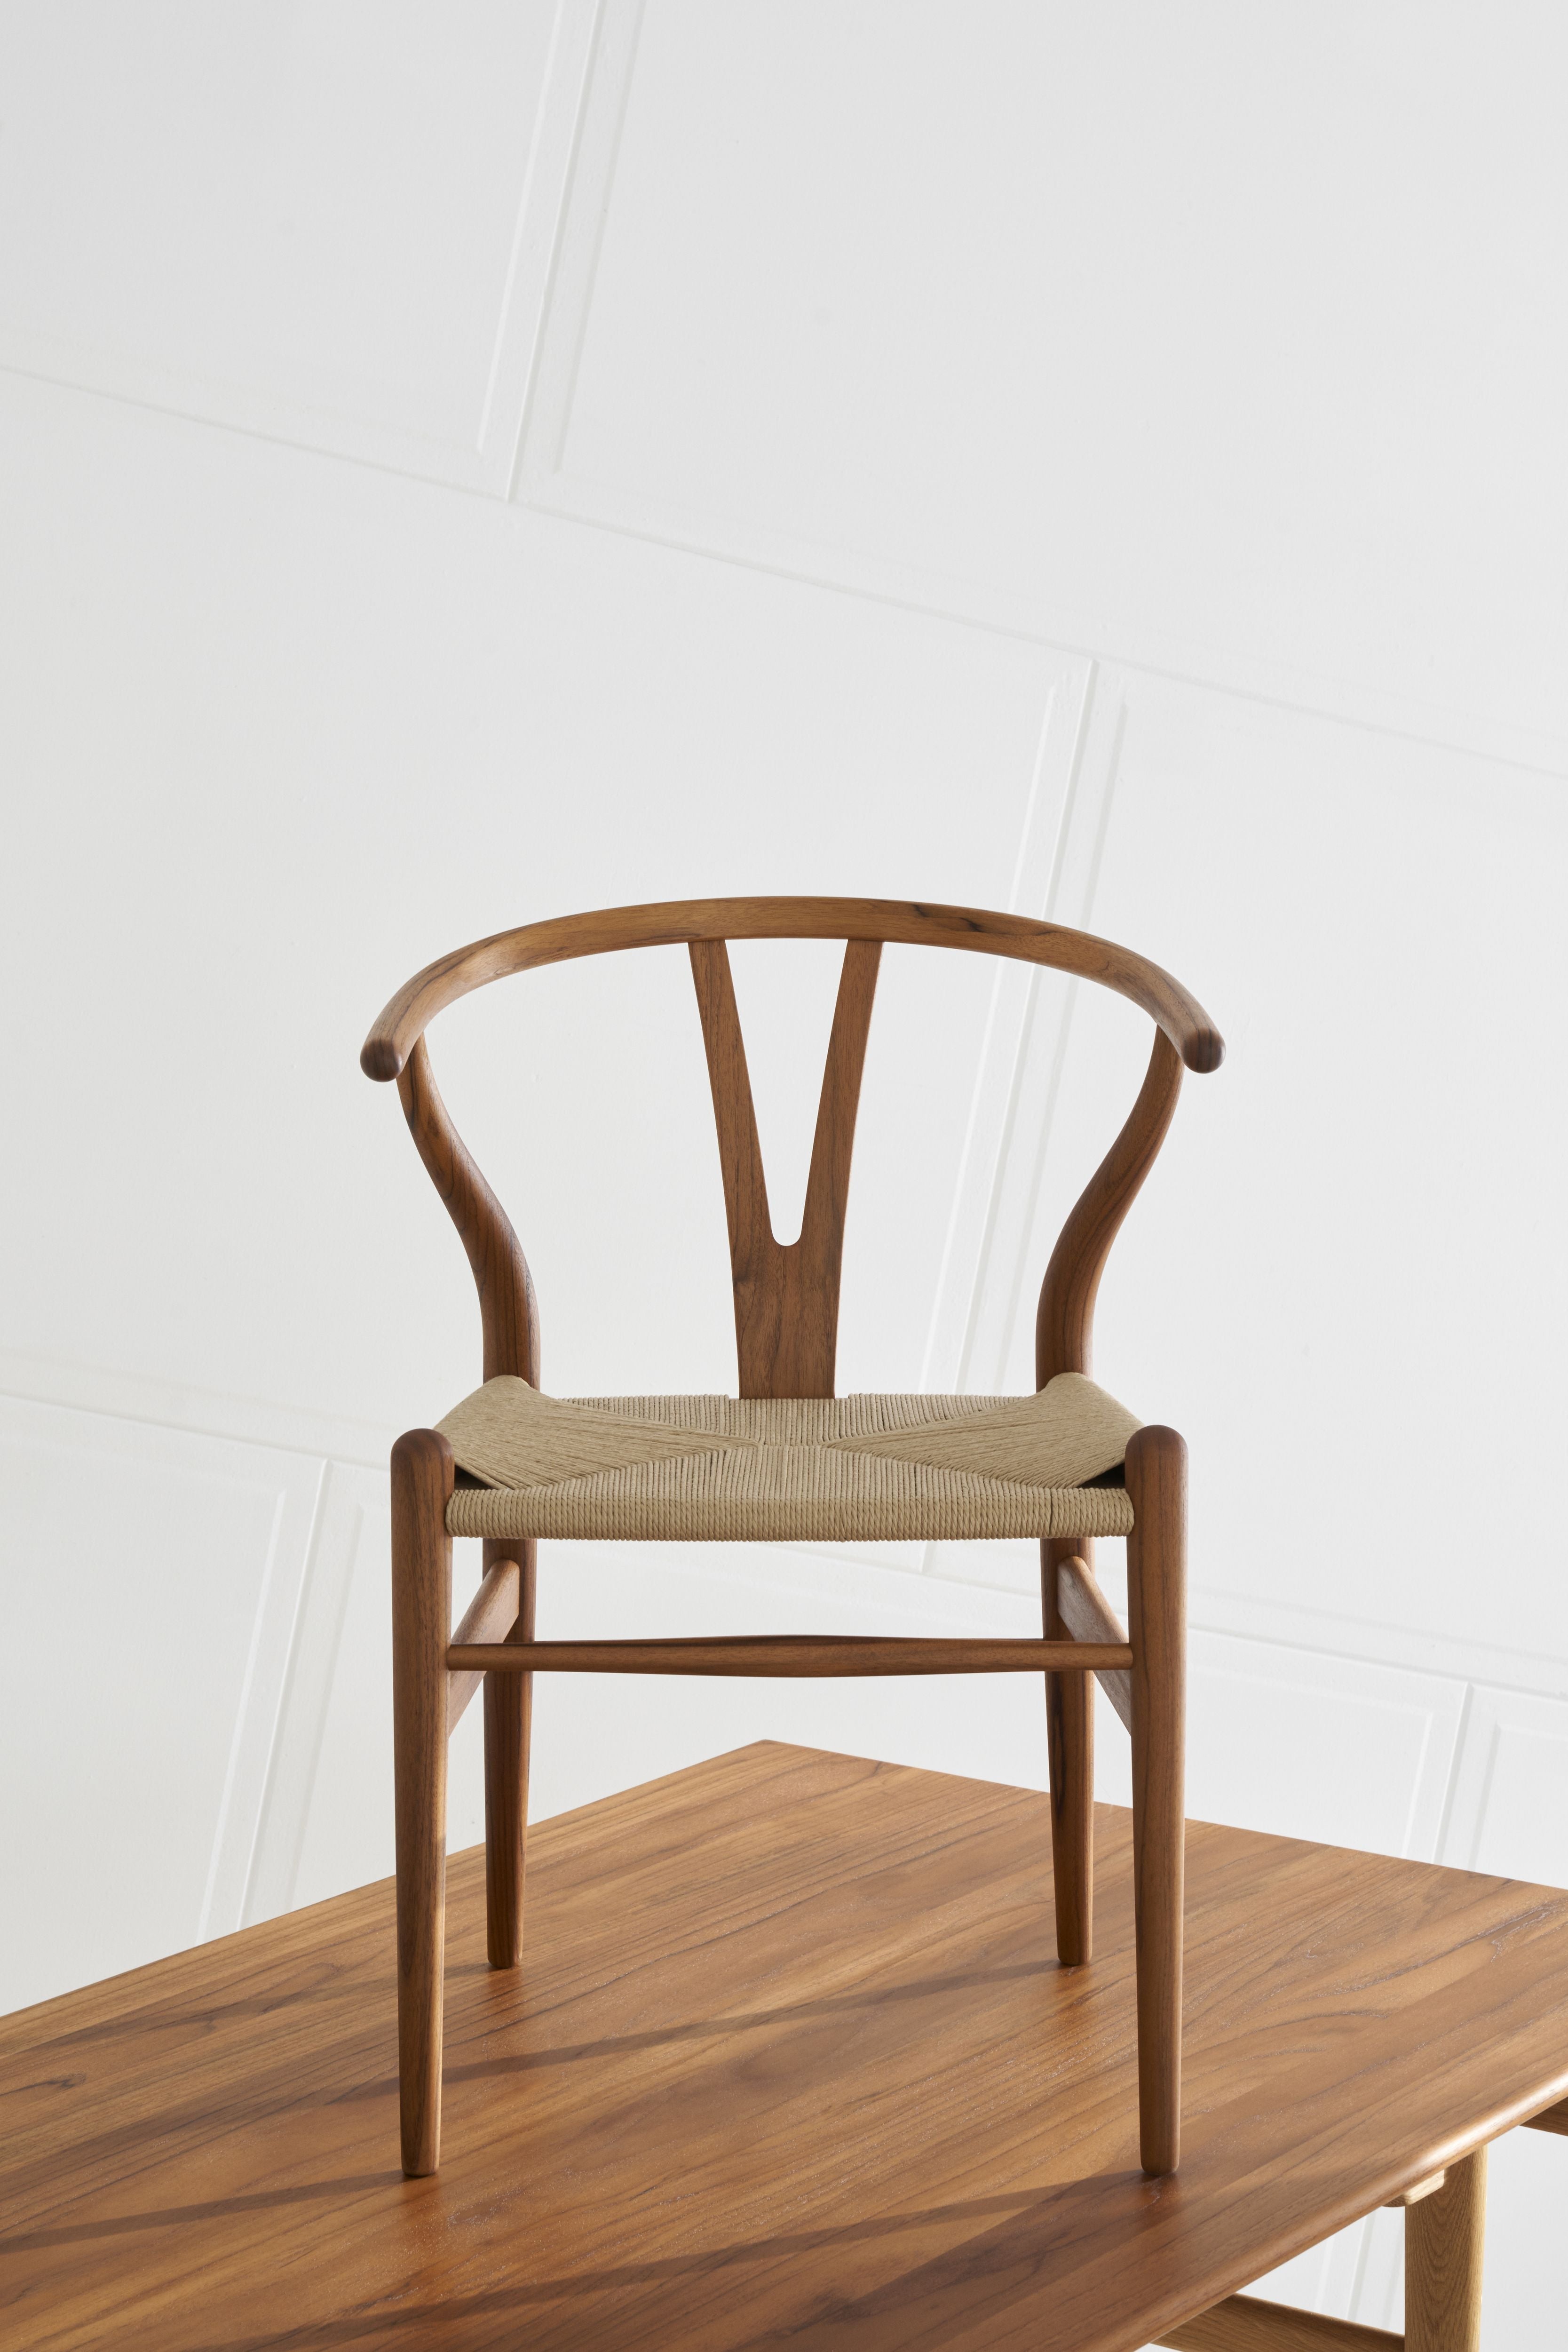 Carl Hansen CH24 Tea de silla de espíritu de la espoleta, cordón natural